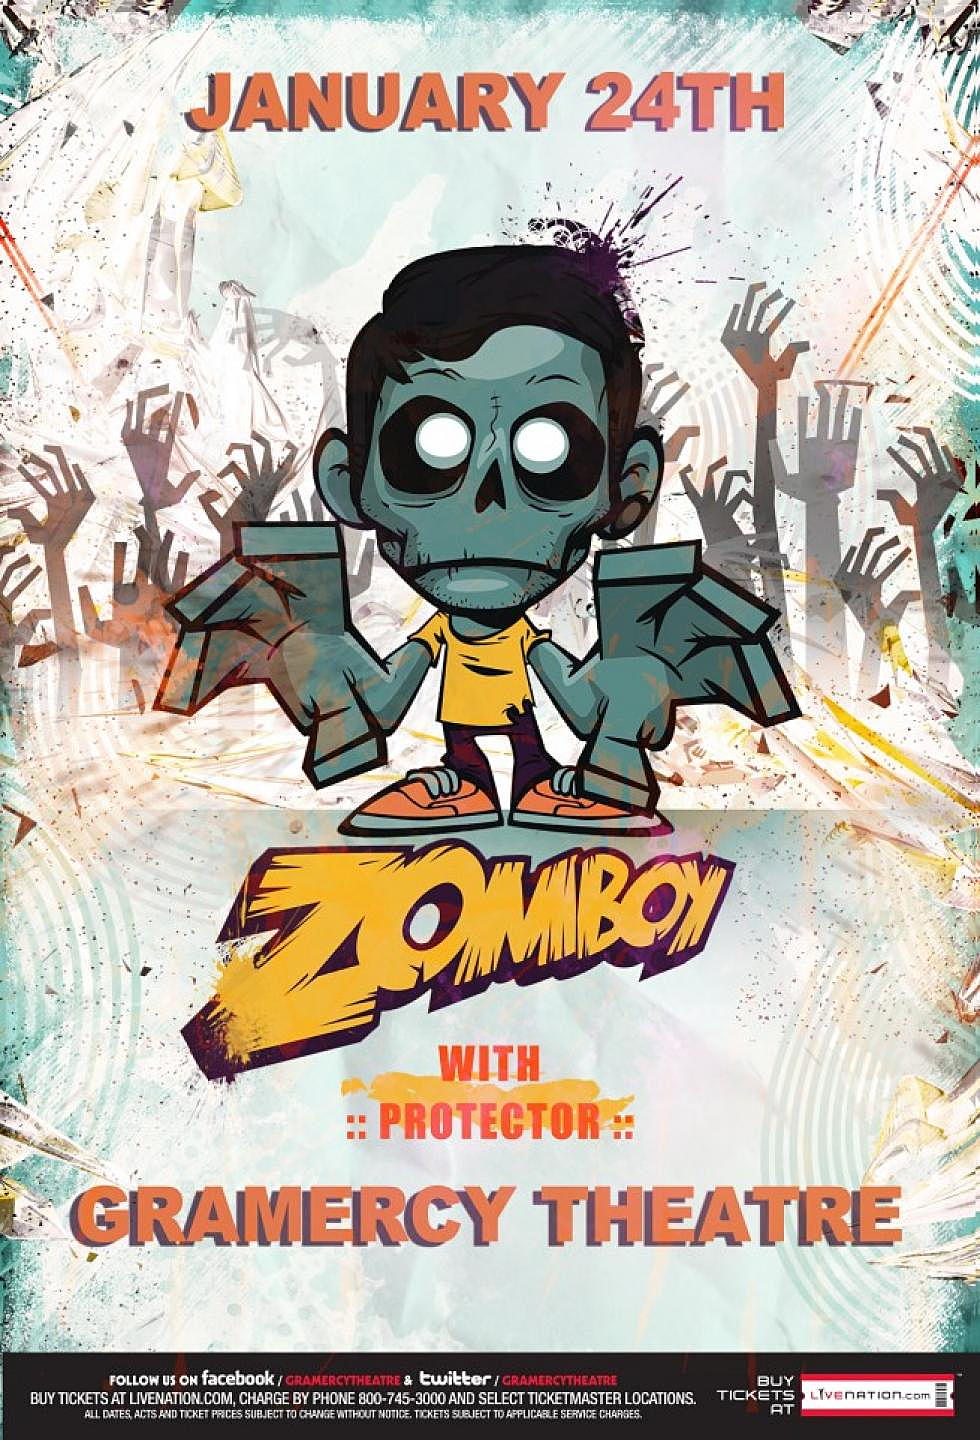 elektro presents: win Meet n Greet w/ Zomboy + 2 VIP Tickets to Gramercy on January 24th